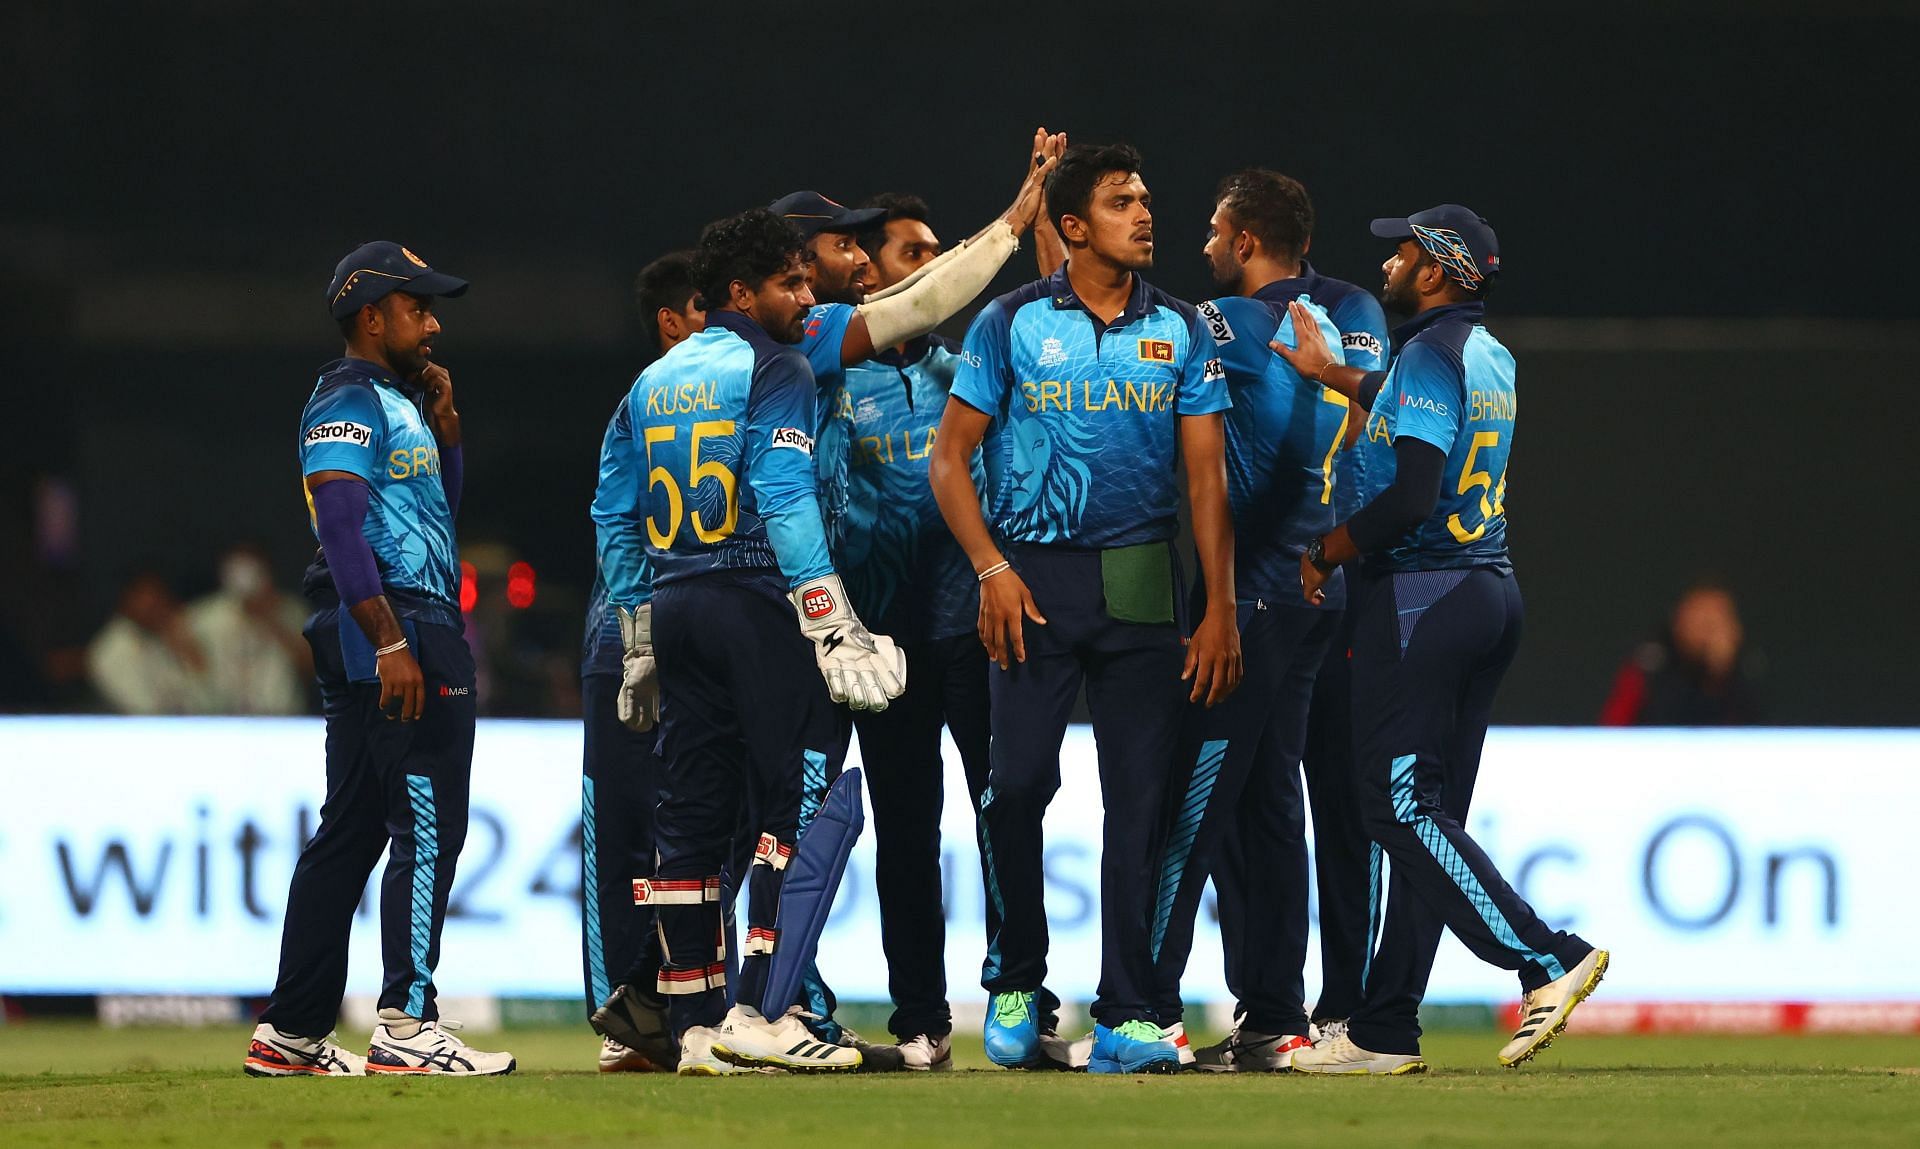 Sri Lanka won the third ODI by 184 runs.